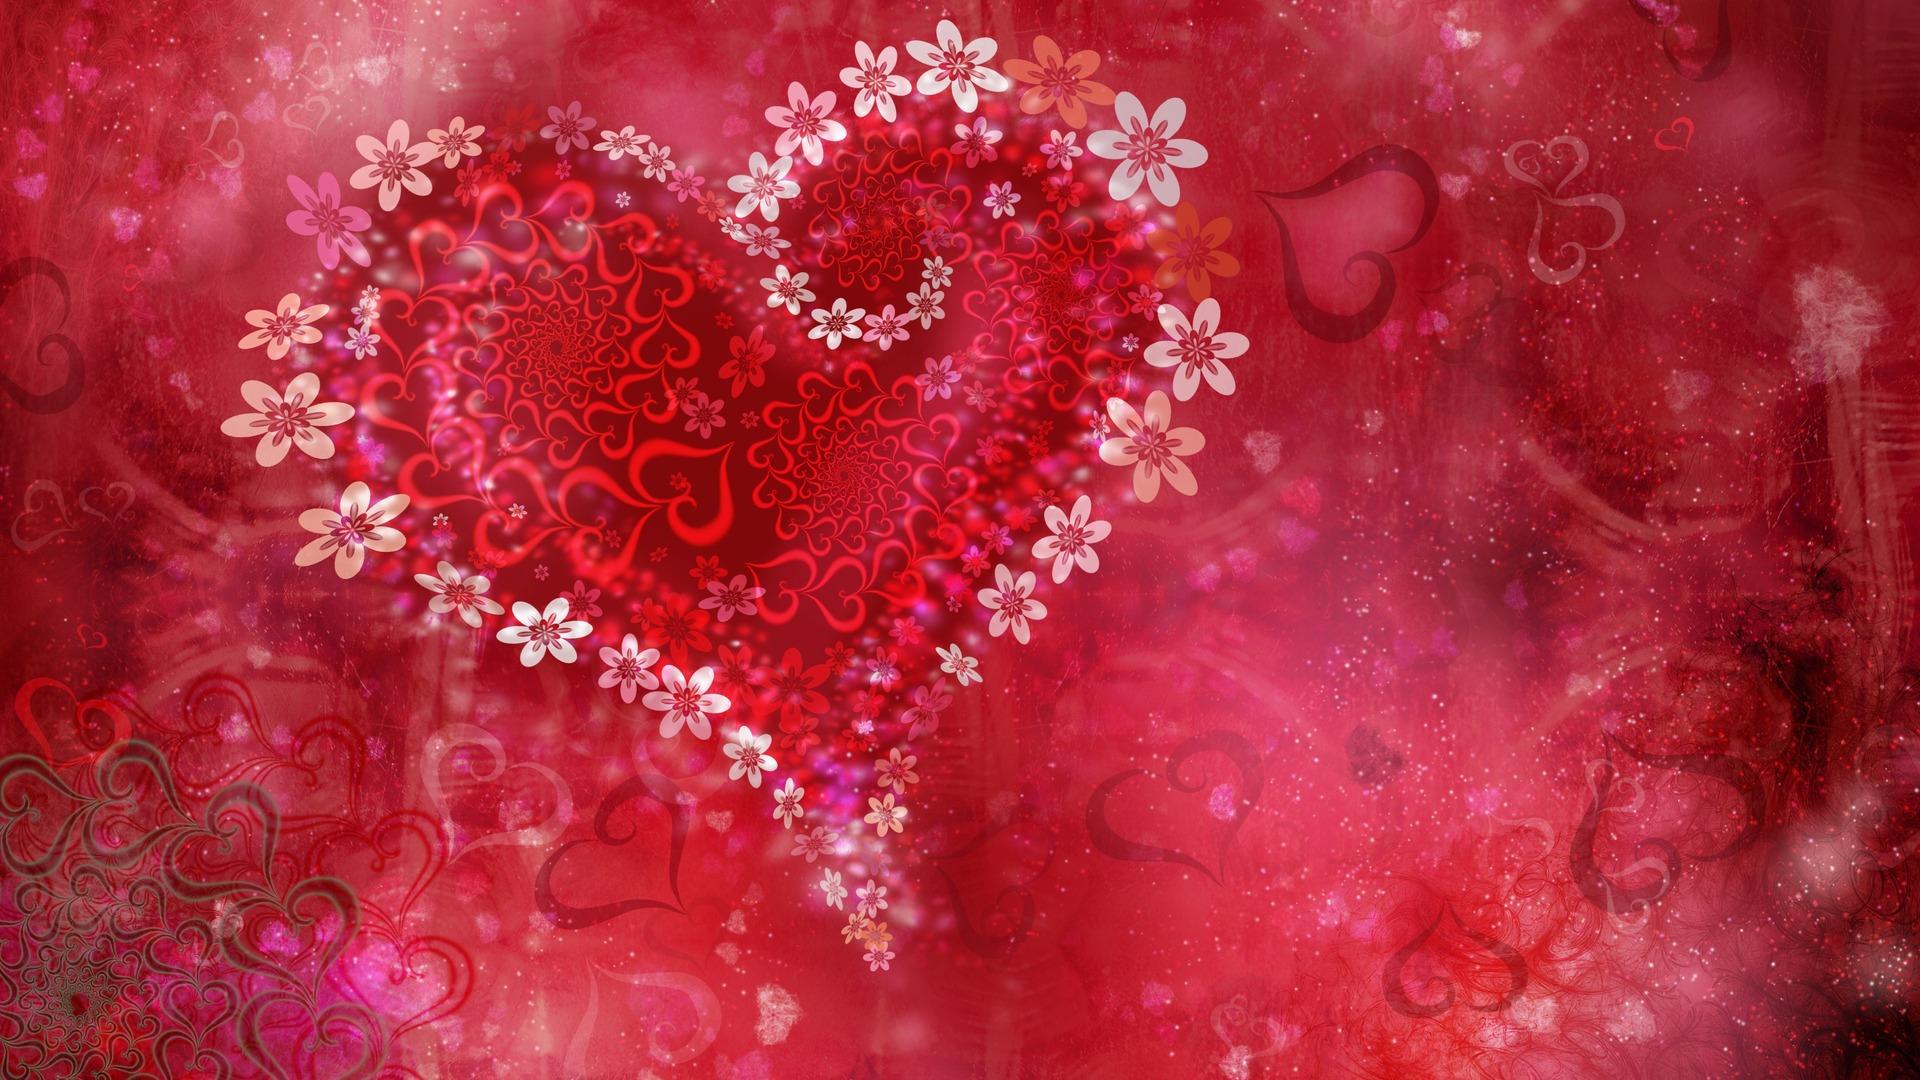 HD Love Heart Flowers Wallpaper Background The Wondrous Pics